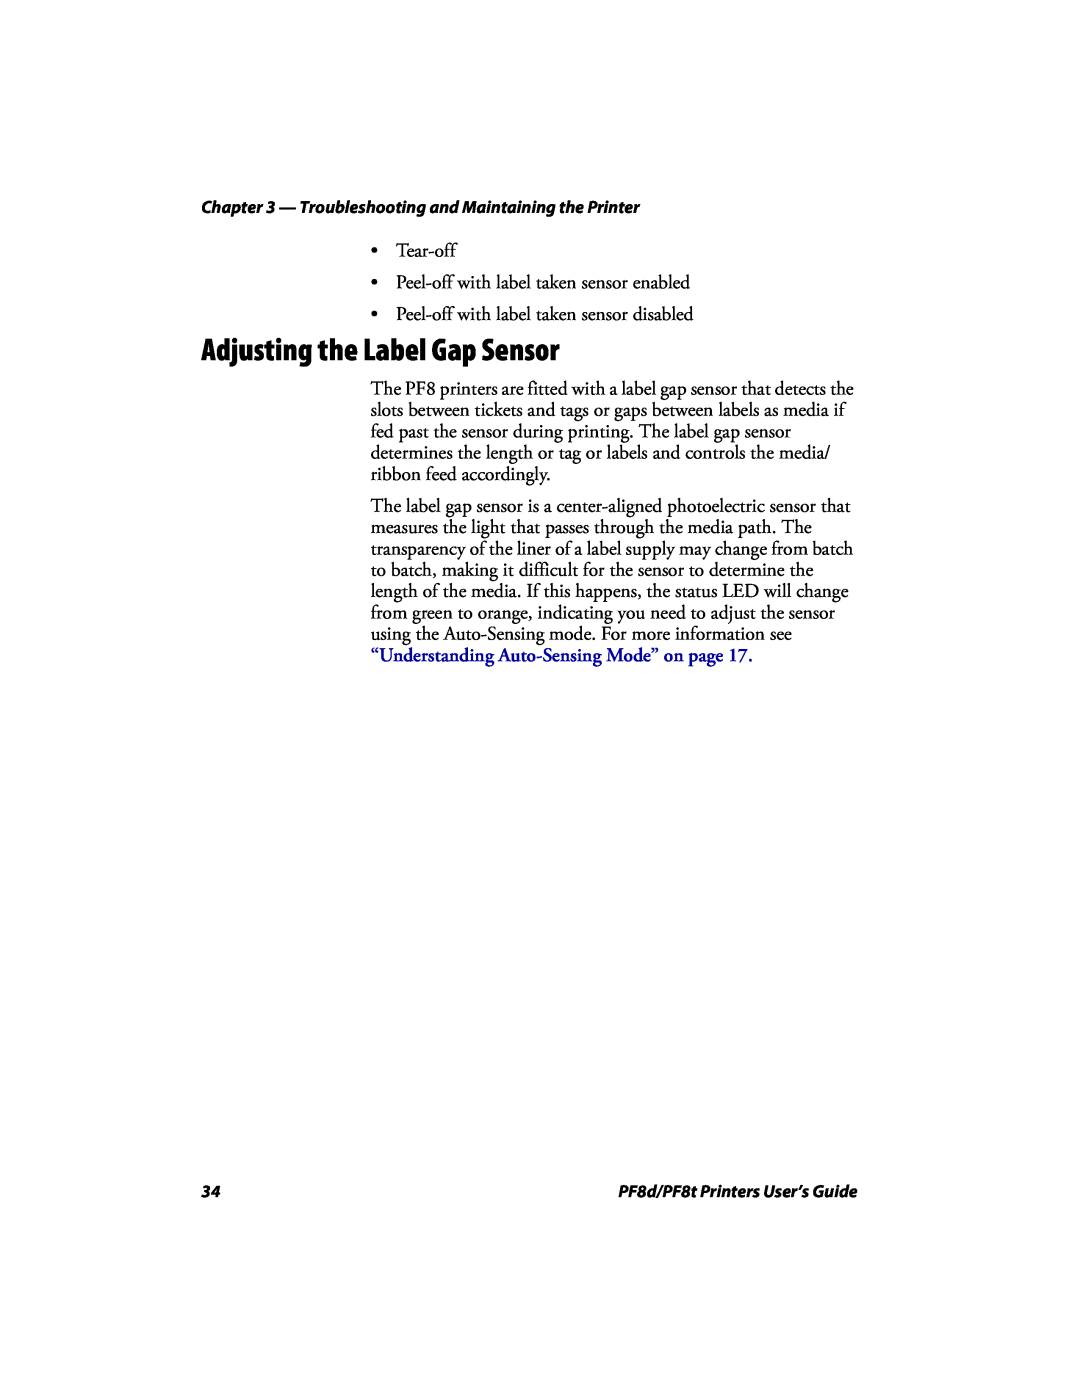 Intermec PF8D, PF8T manual Adjusting the Label Gap Sensor, “Understanding Auto-Sensing Mode” on page 